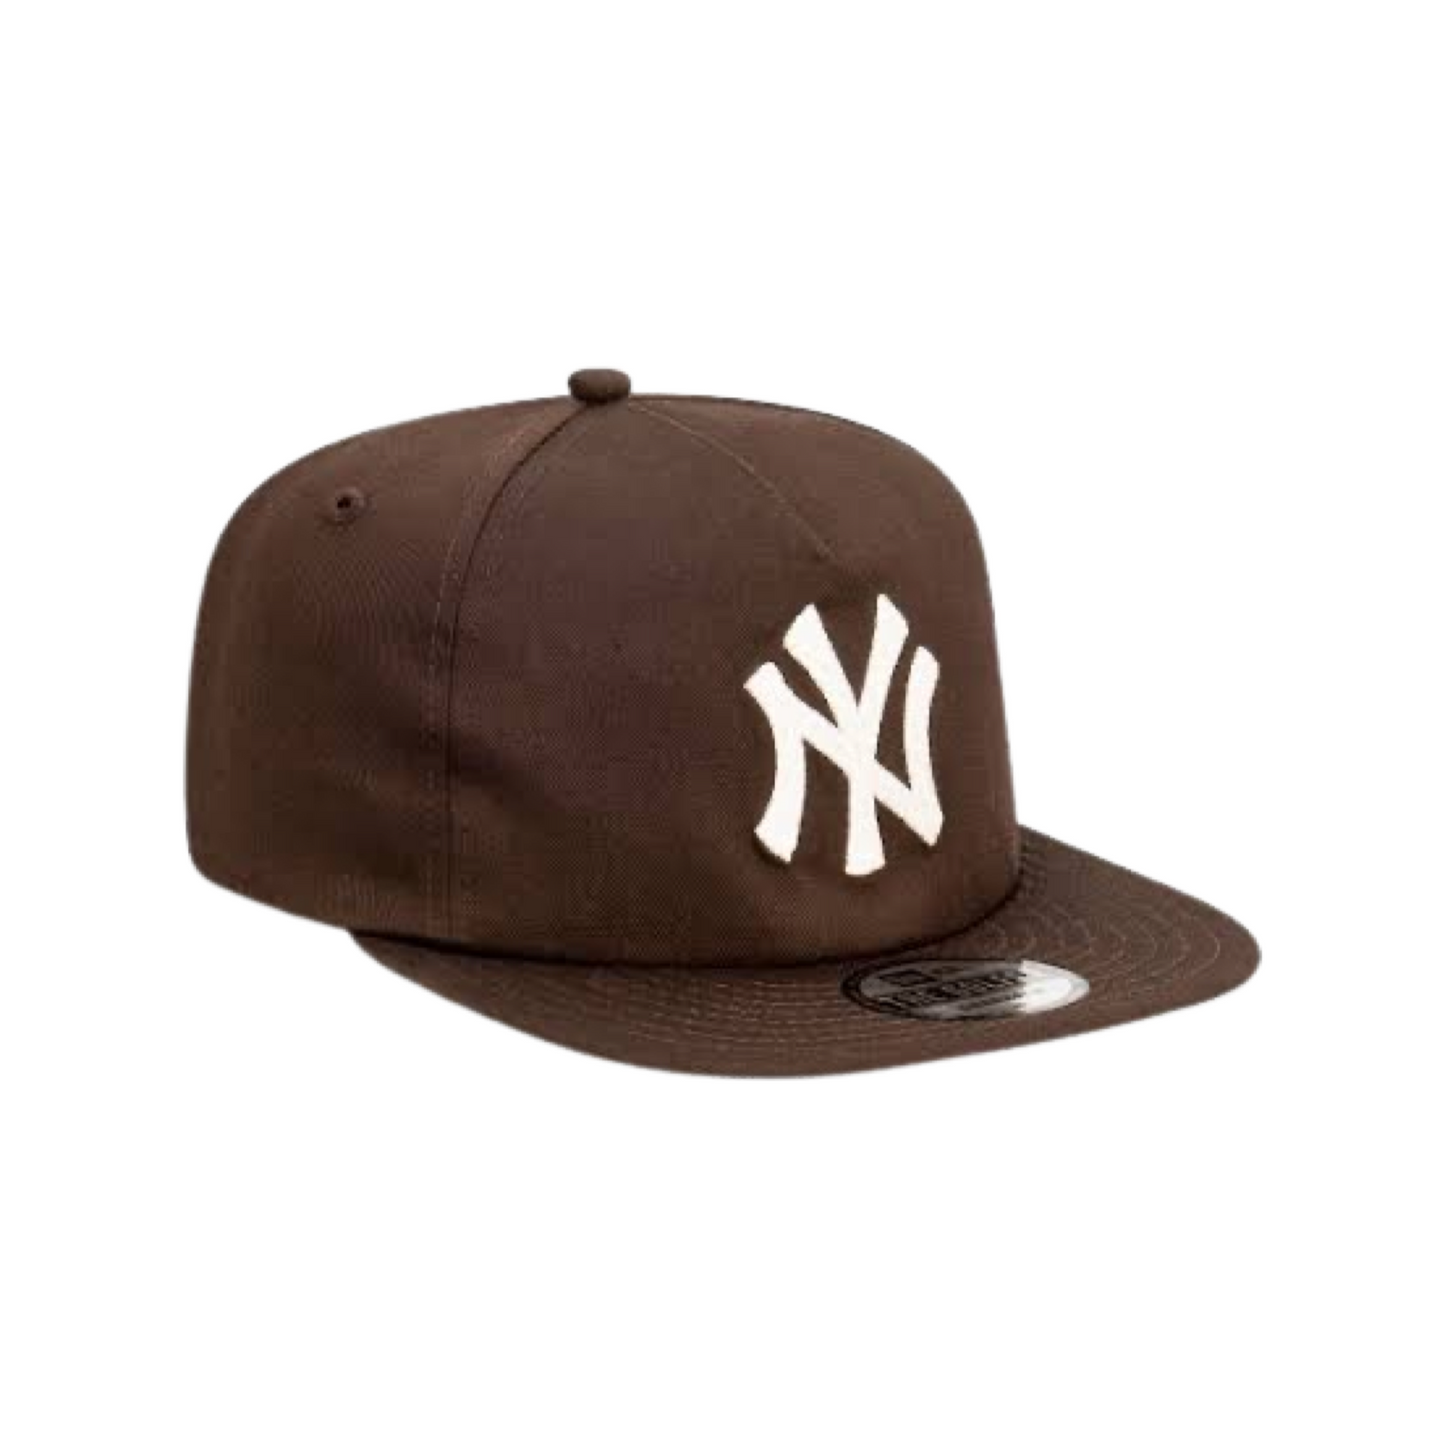 New Era Golfer Cap New York Yankees Walnut Stone Chain Stitch Snapback Cap